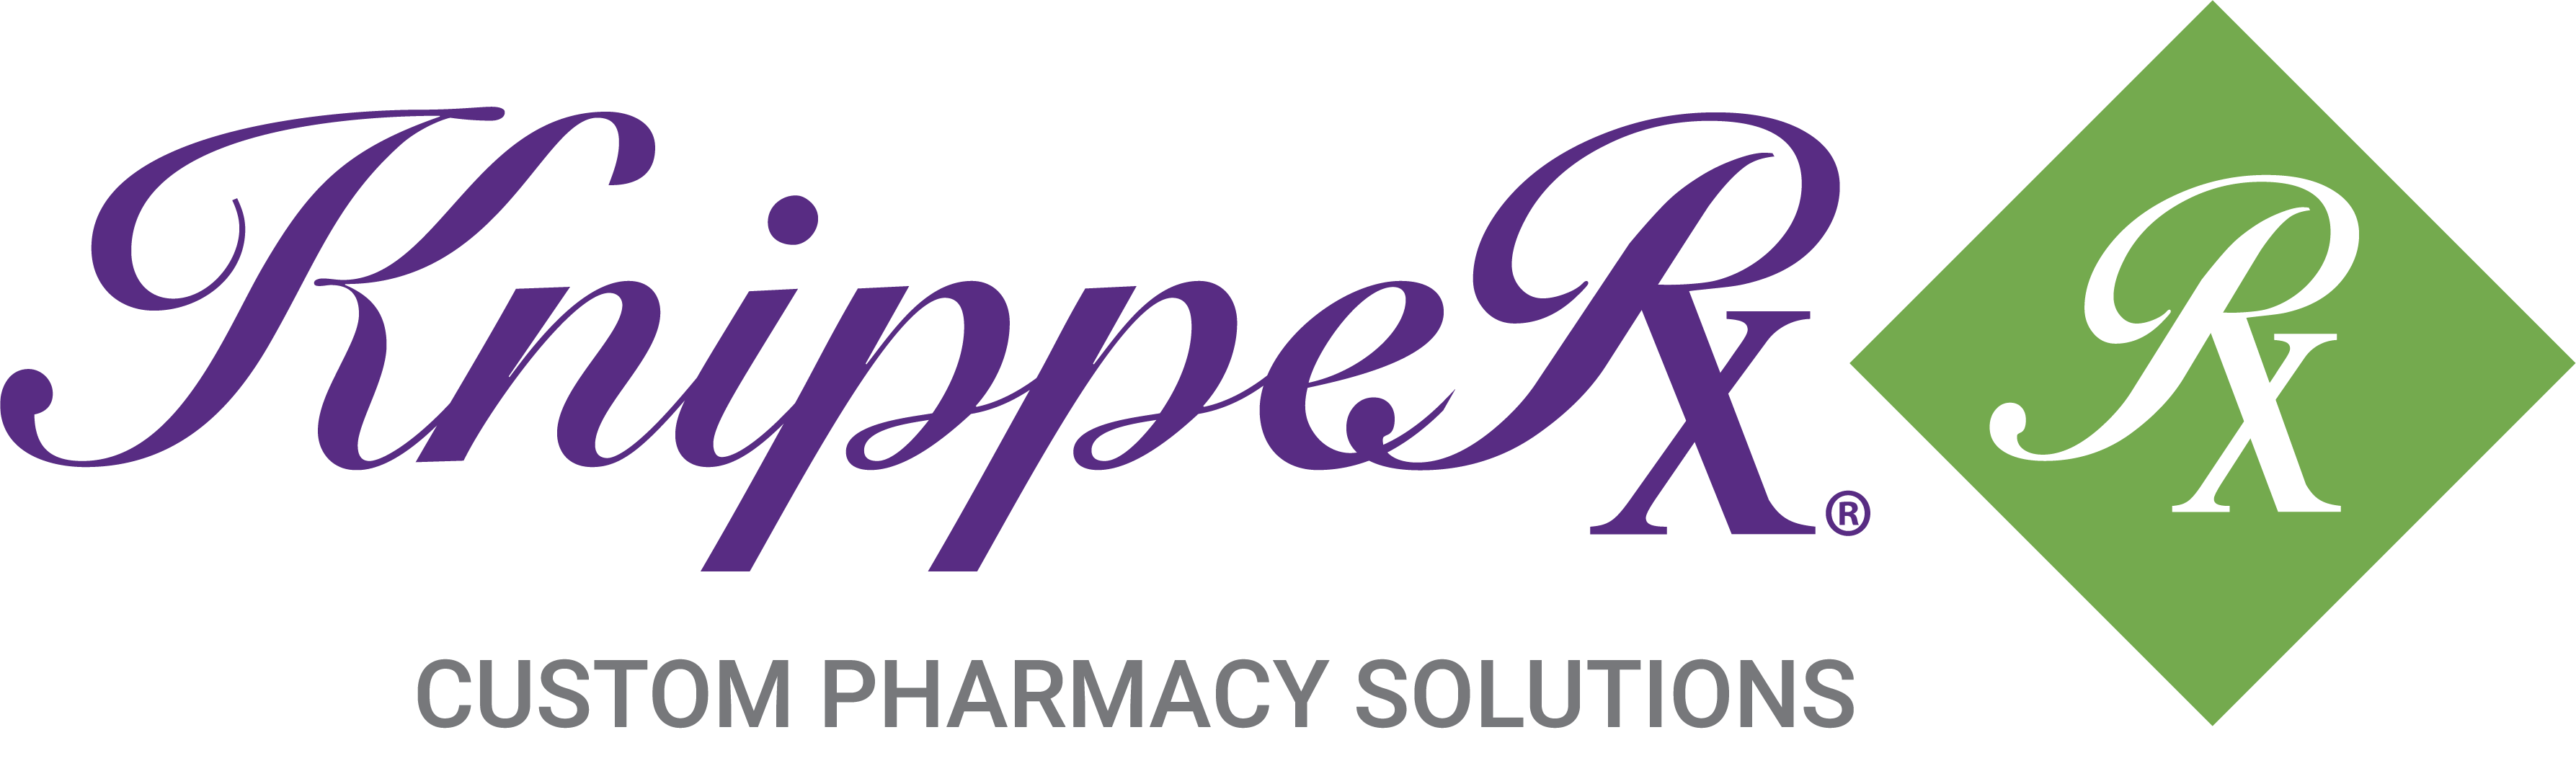 KnippeRx Logo